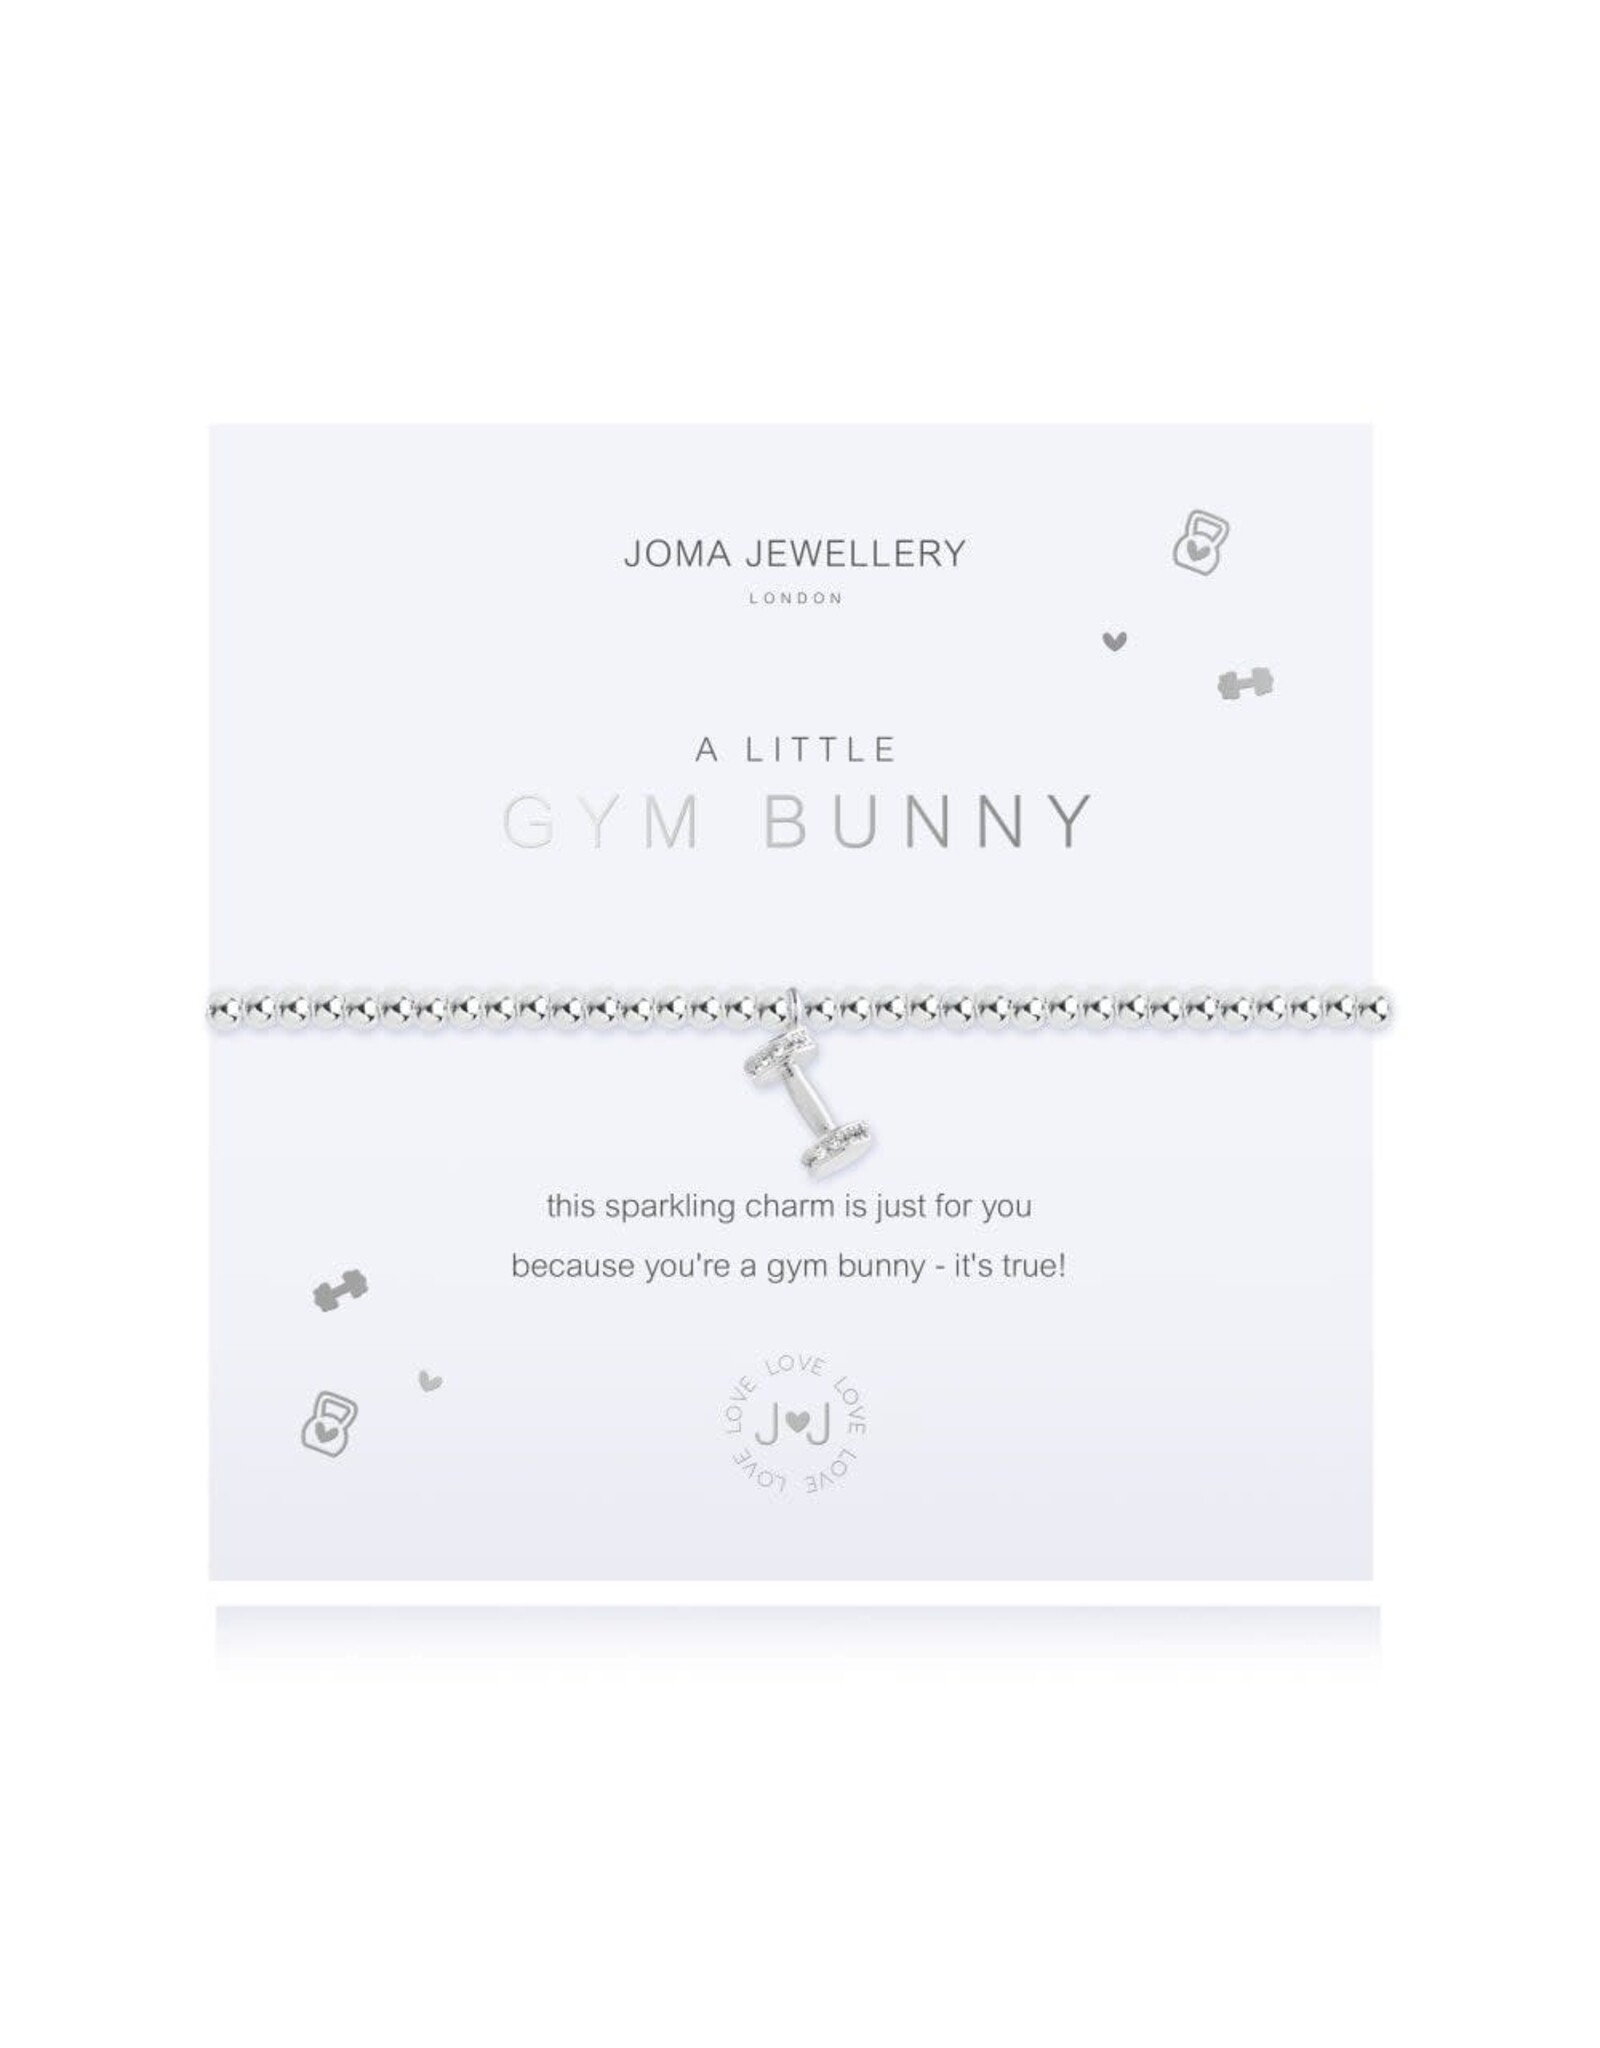 Joma Jewellery A Little - Gym Bunny